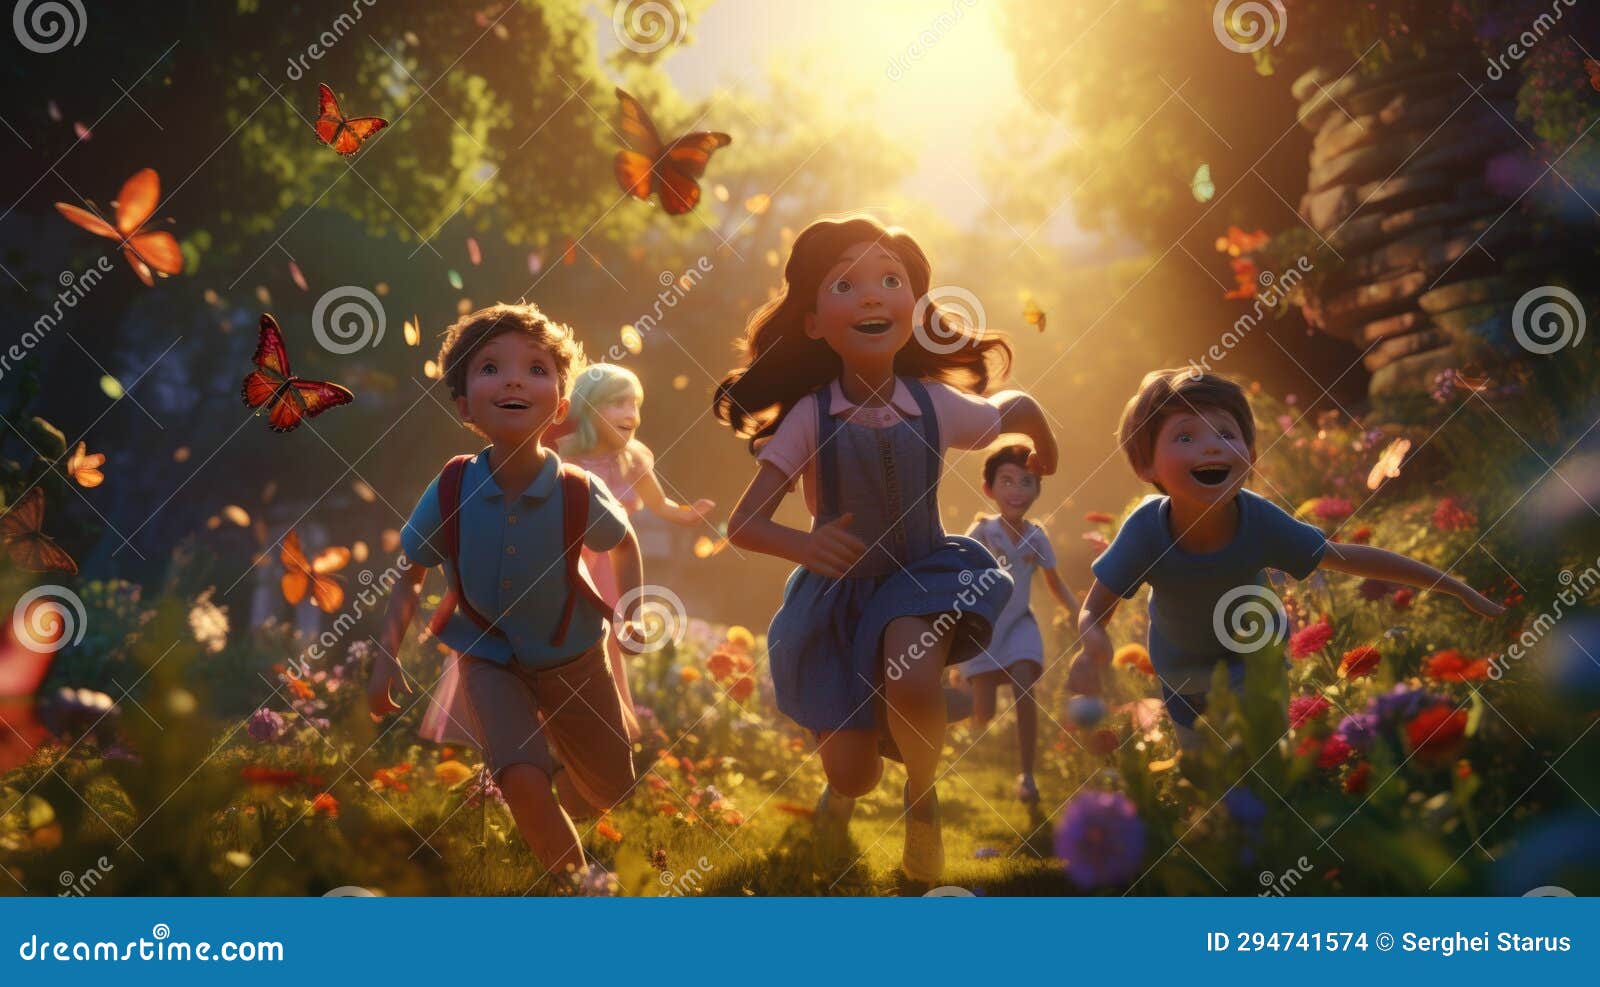 The Children are Running through a Field of Butterflies, AI Stock Photo ...